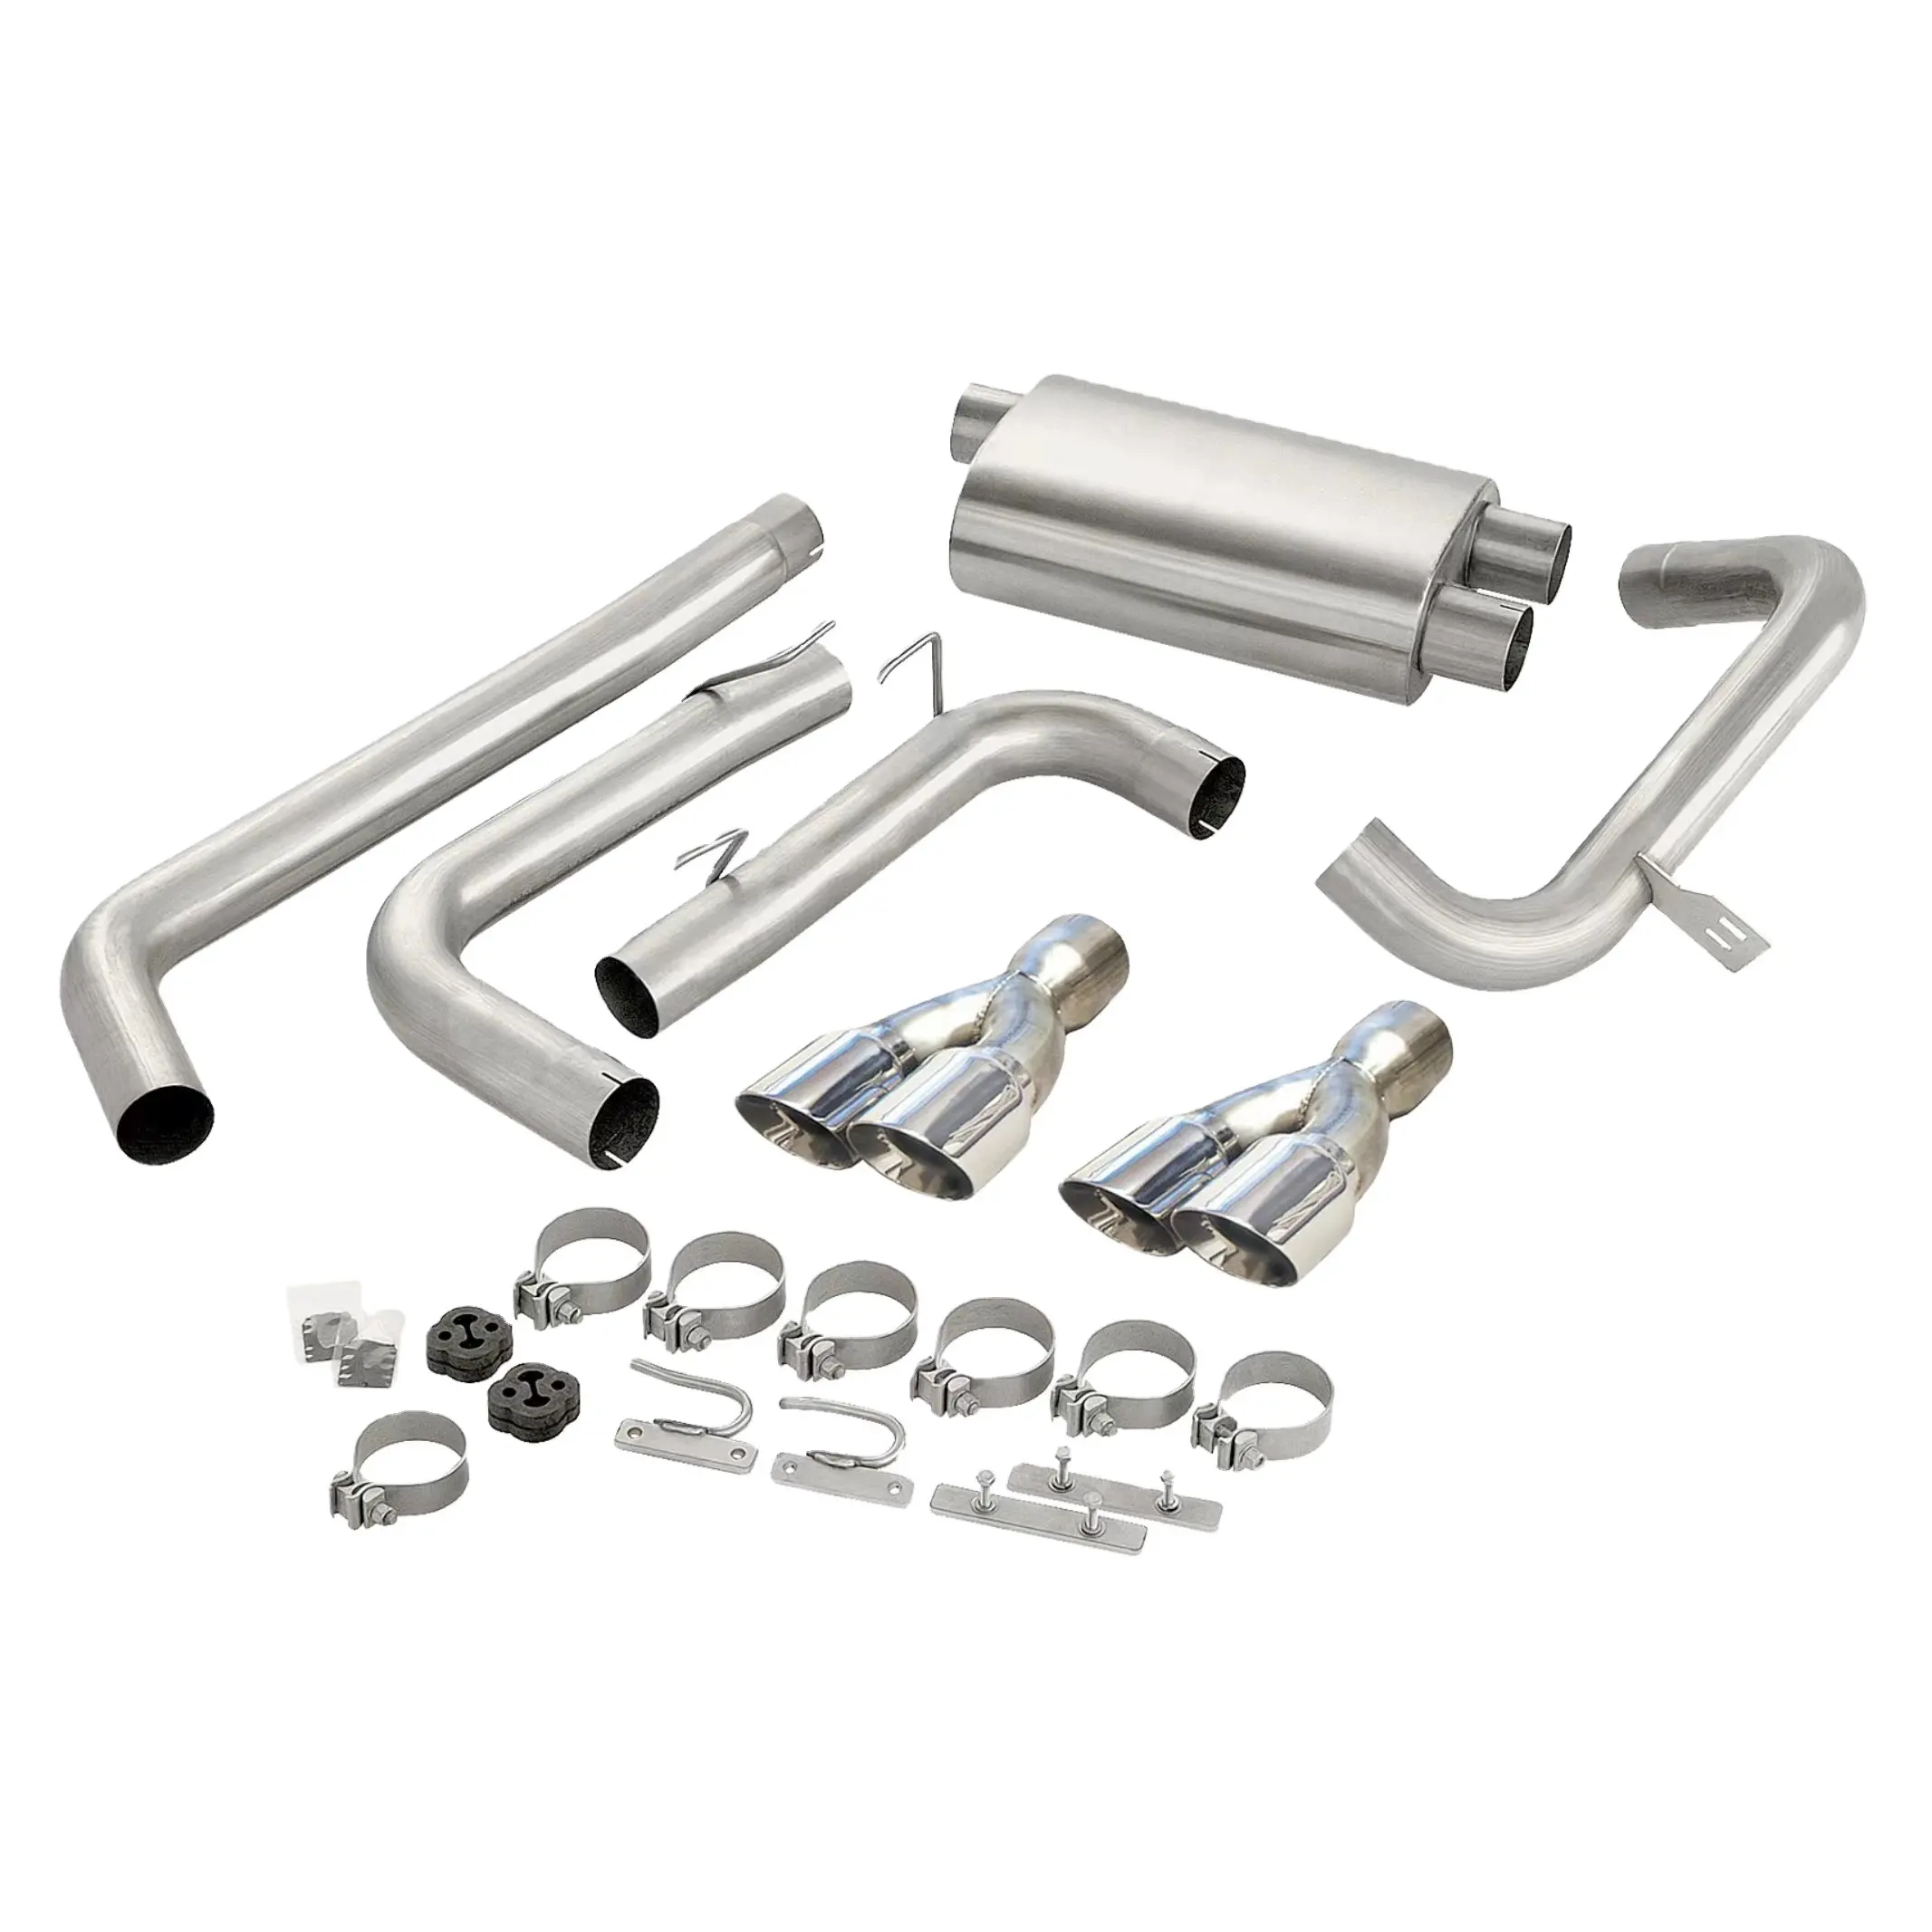 Sistem pipa knalpot aluminium AS120 DX53D untuk industri mobil Otomobil-Cora